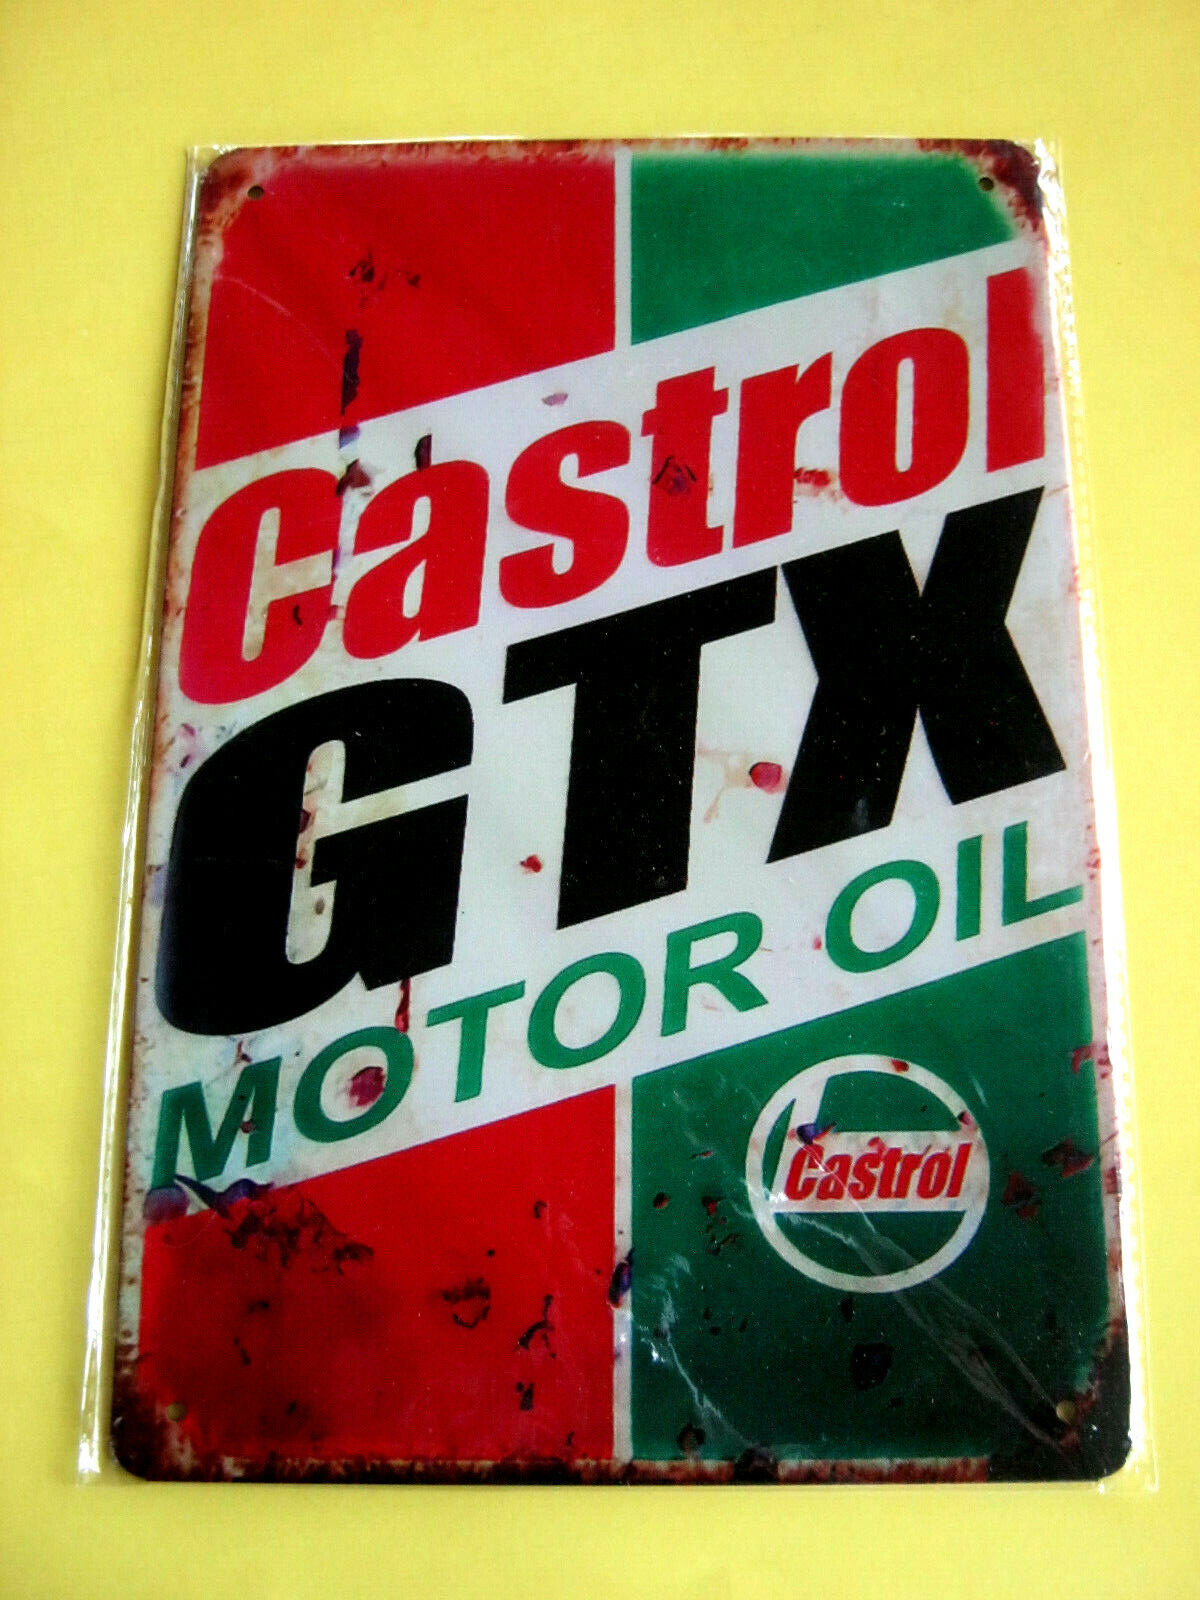 Castrol Gtx Motor Oil Metal Tin Sign Garage Shop Home Man Cave Wall Decor Plaque